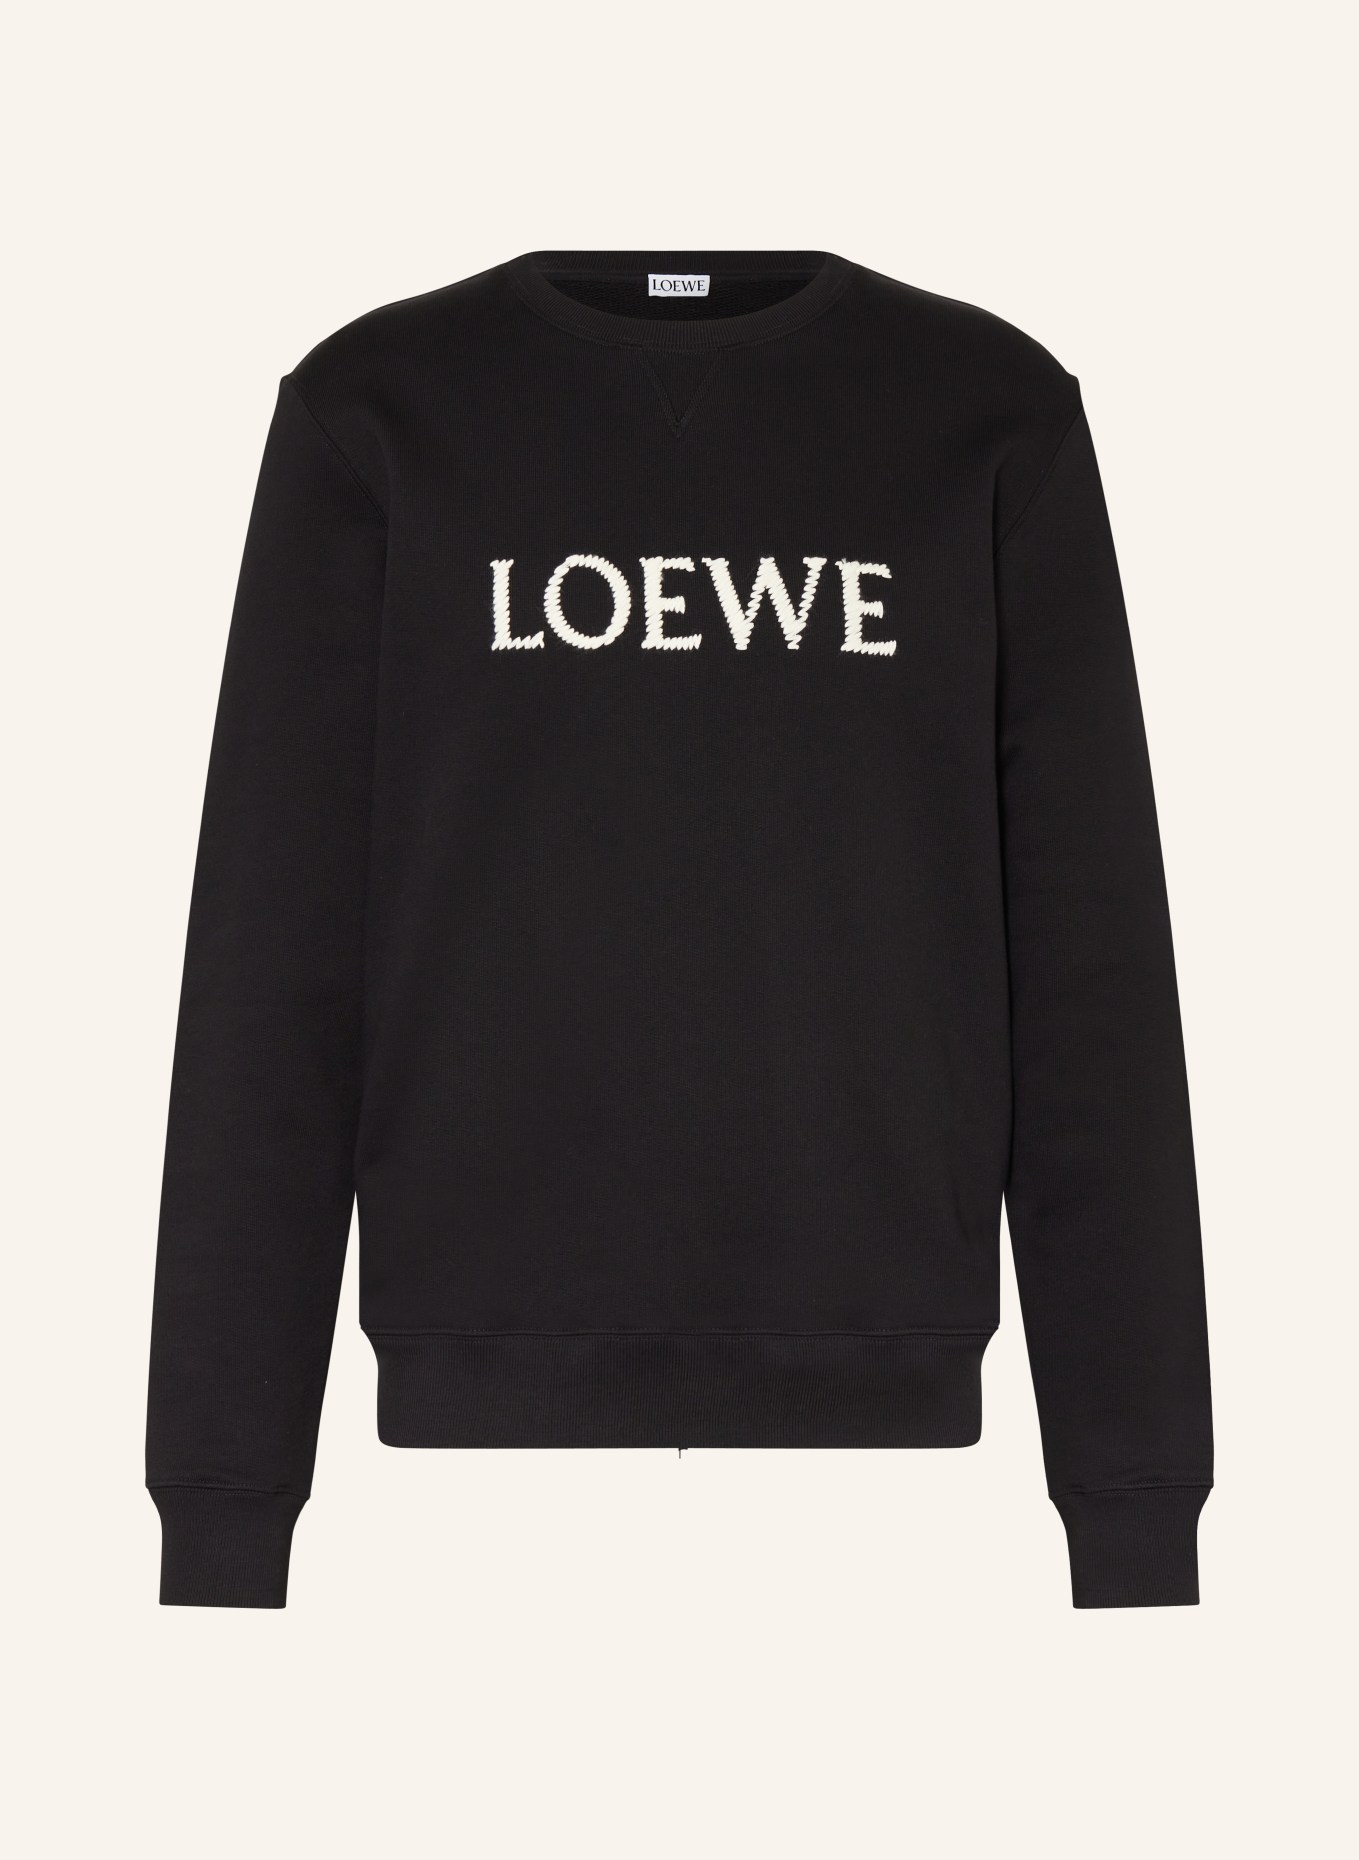 LOEWE Sweatshirt, Farbe: SCHWARZ (Bild 1)